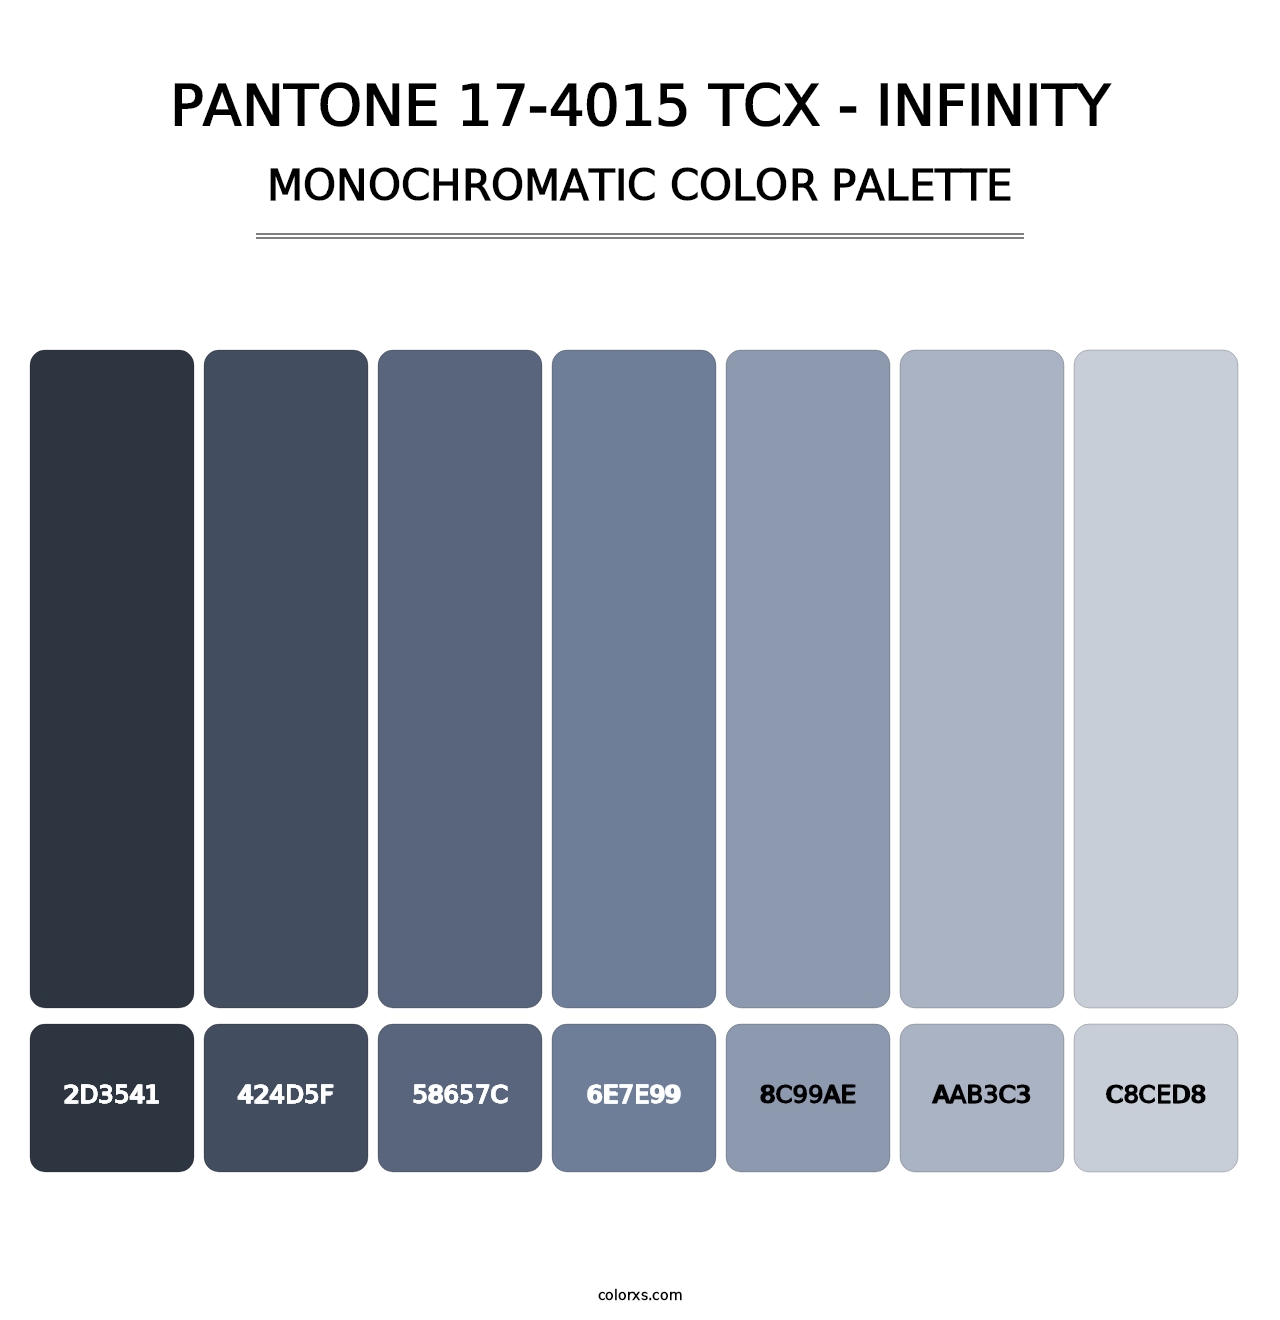 PANTONE 17-4015 TCX - Infinity - Monochromatic Color Palette